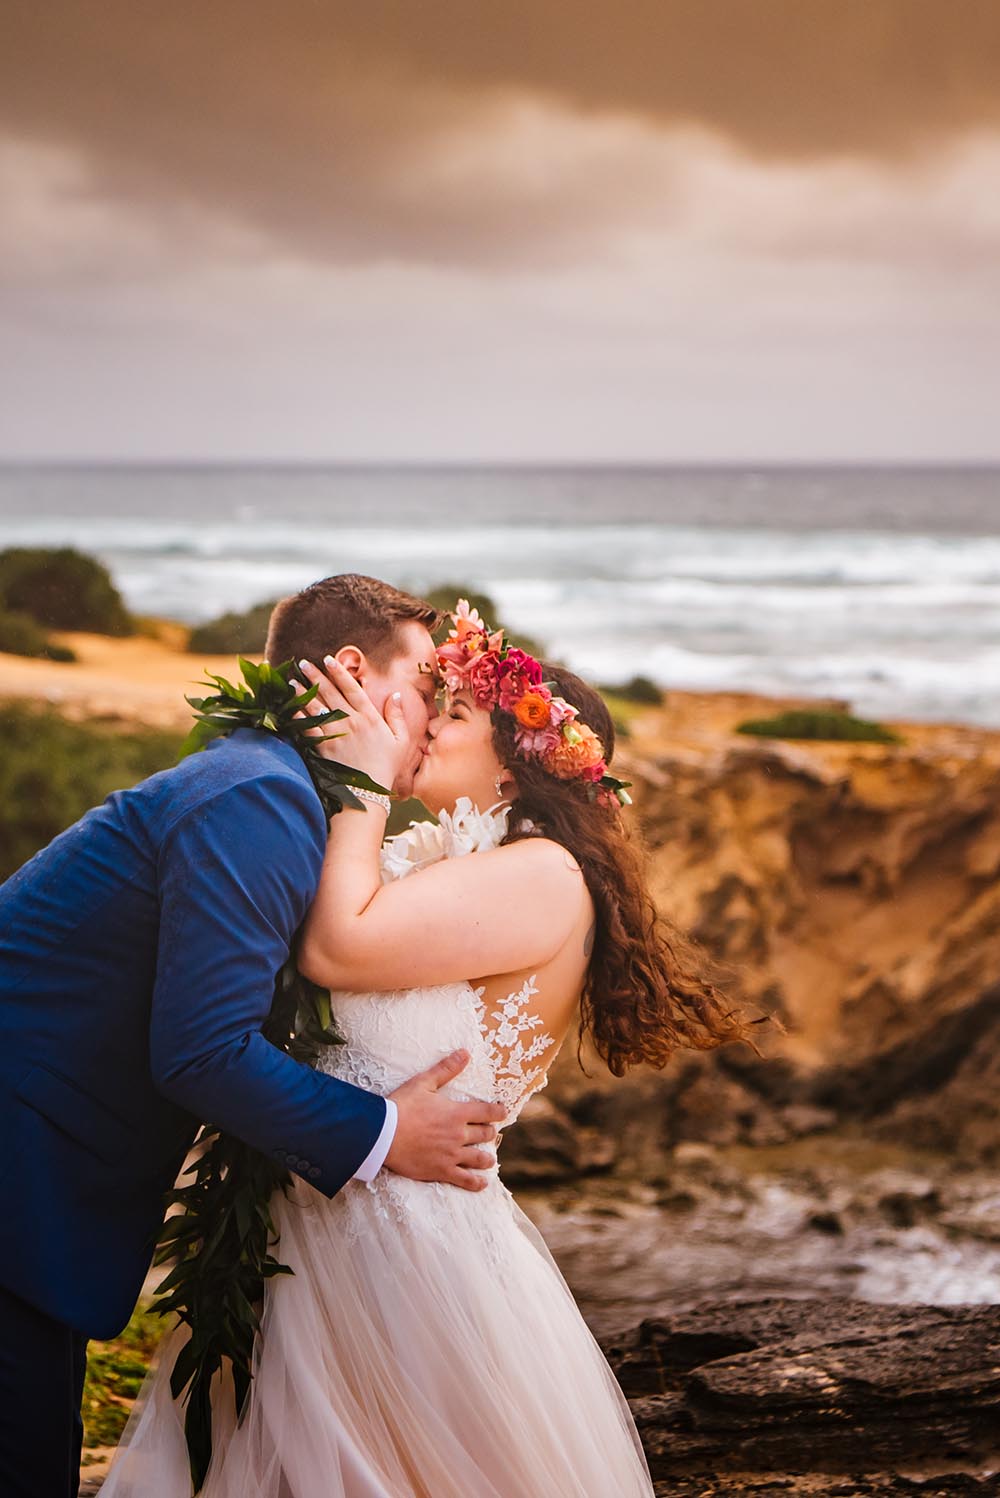 Kauai Hawaii wedding ceremony at shipwreck beach